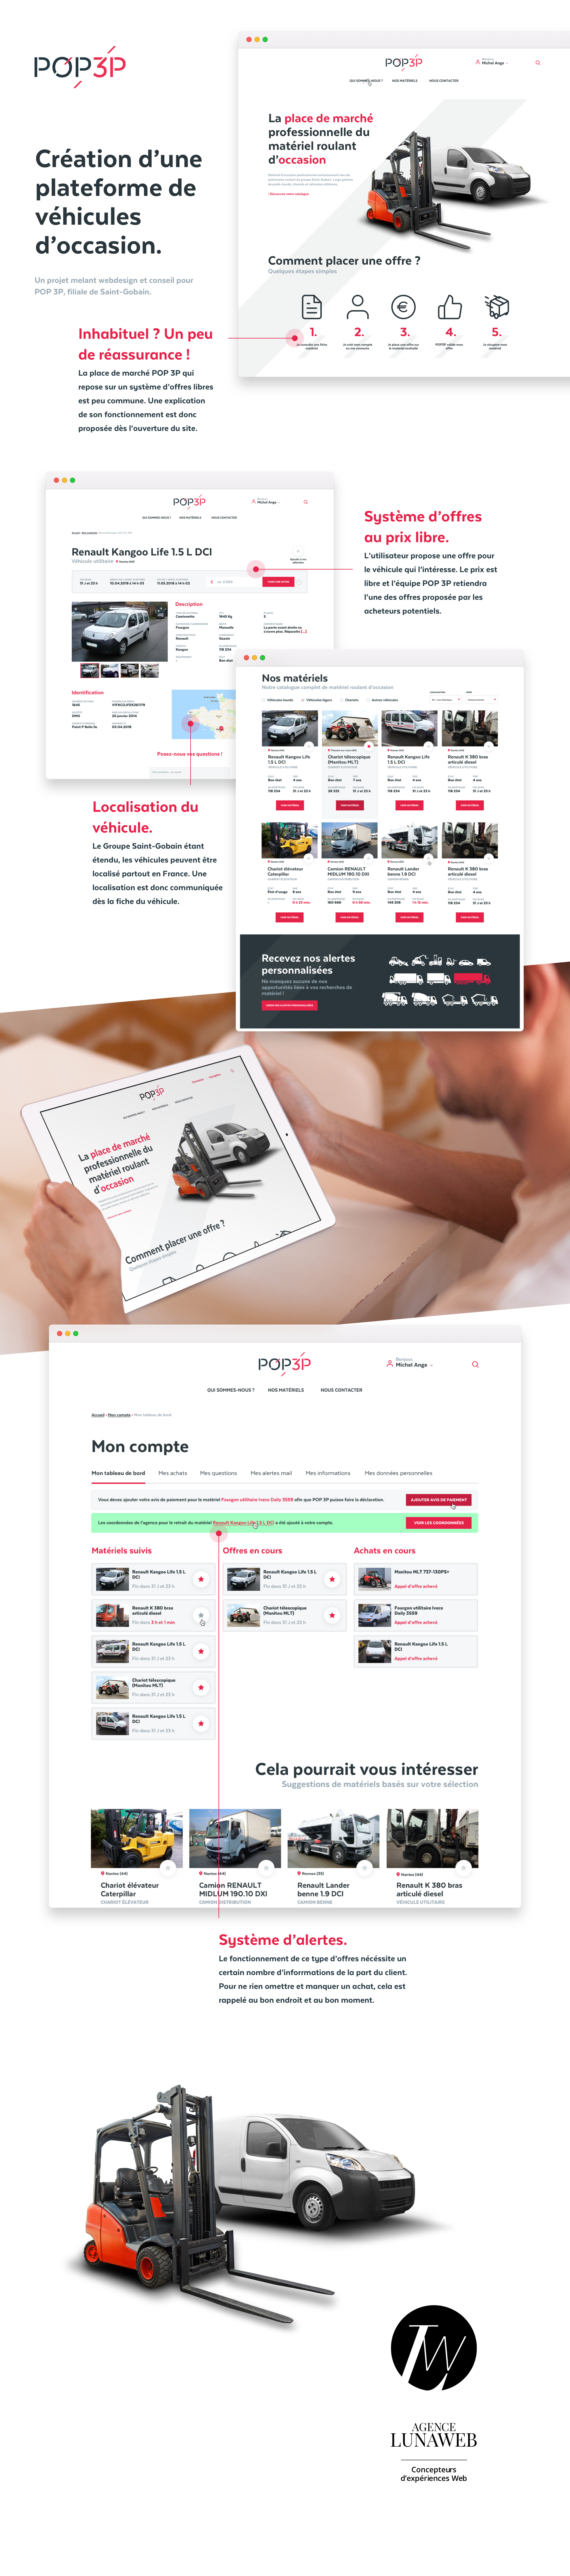 POP 3P - Infographie webdesign